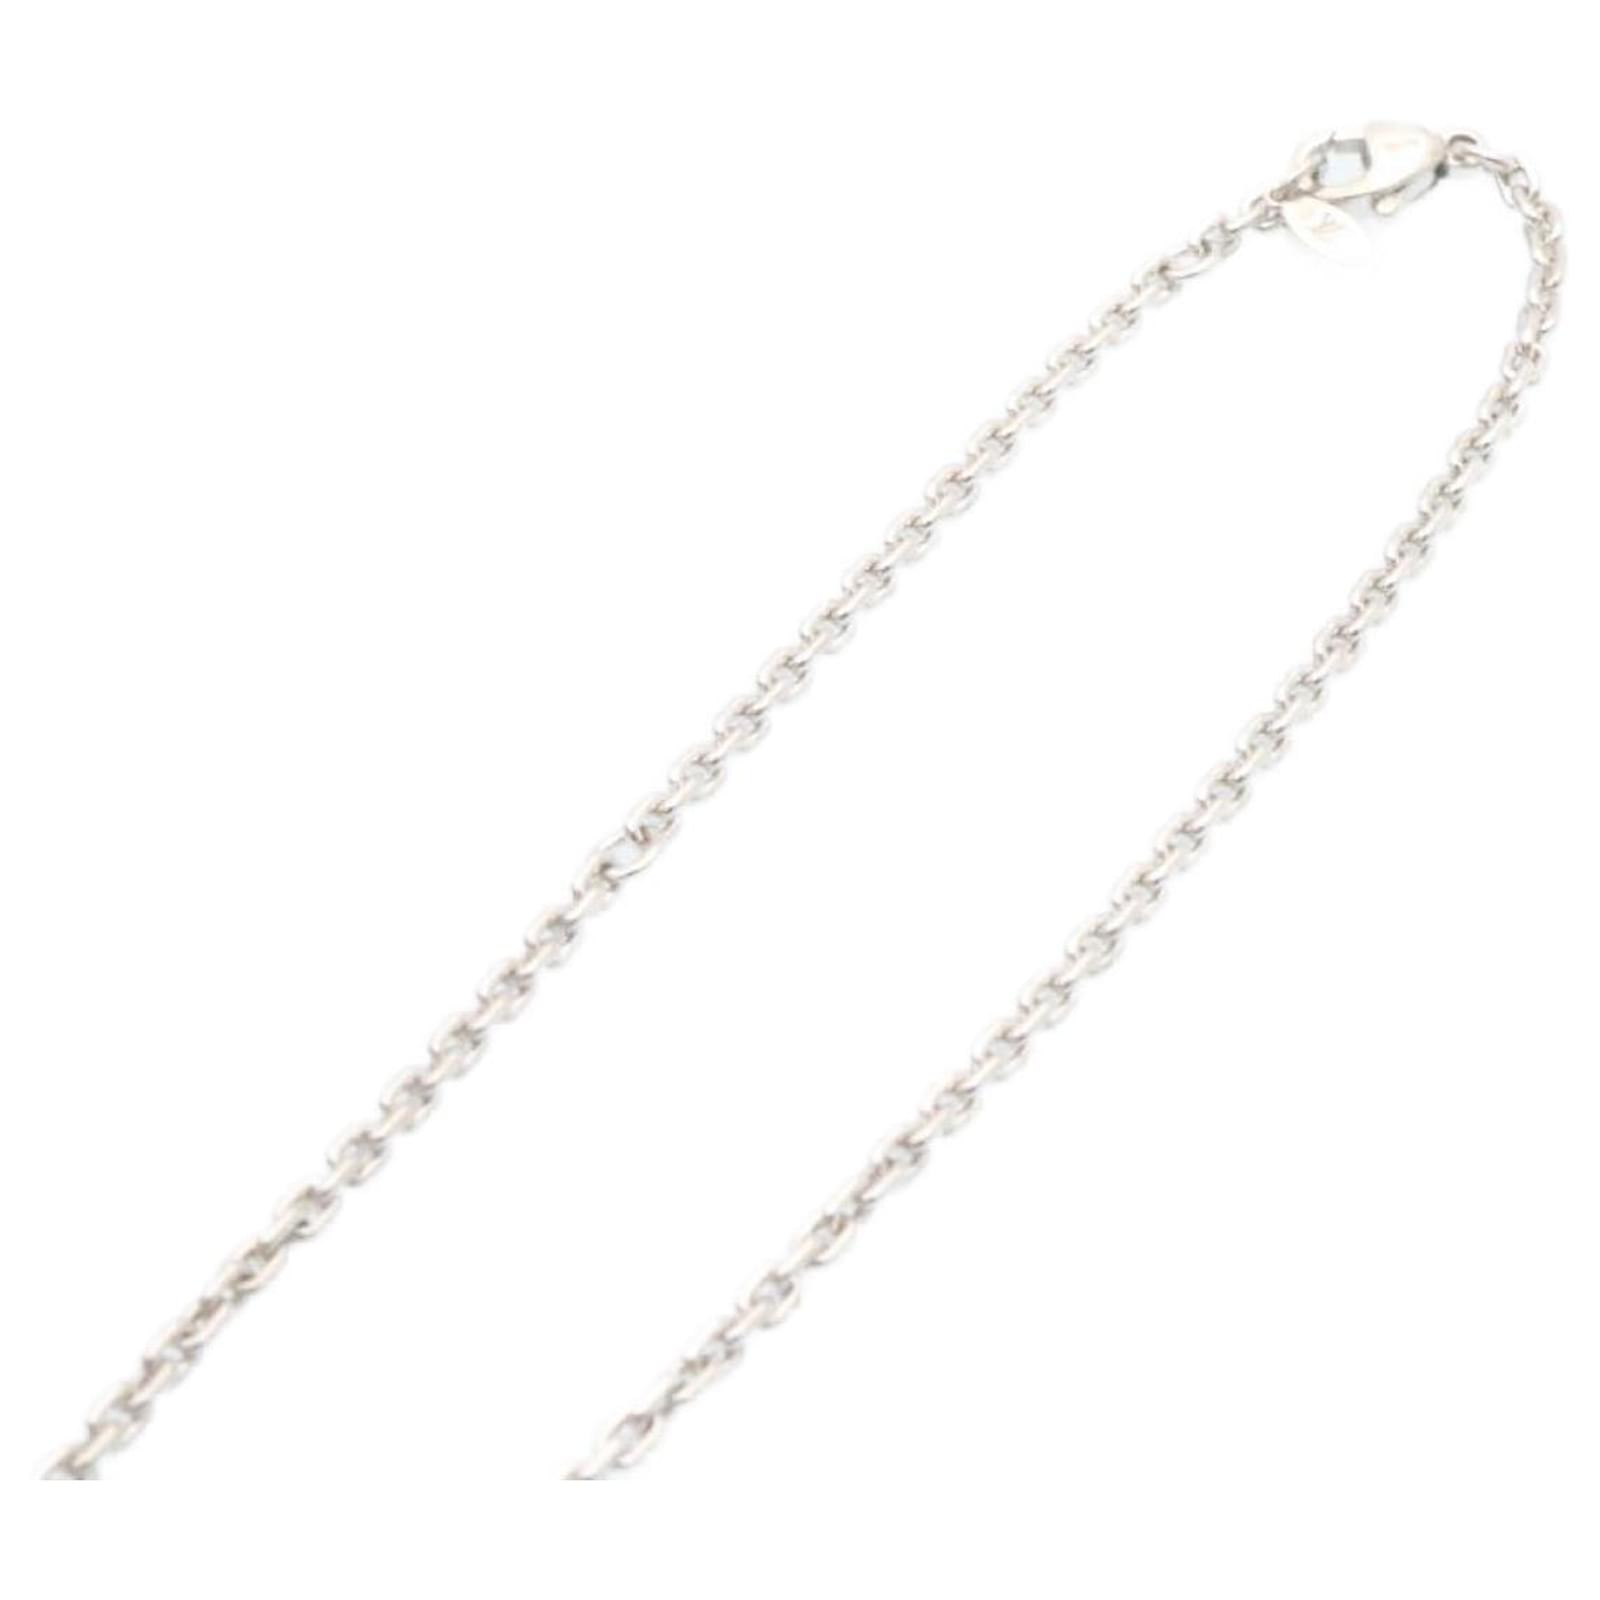 Louis Vuitton LOUIS VUITTON Pandantif LV Volt One PM Necklace 18K K18 White  Gold Diamond Women's